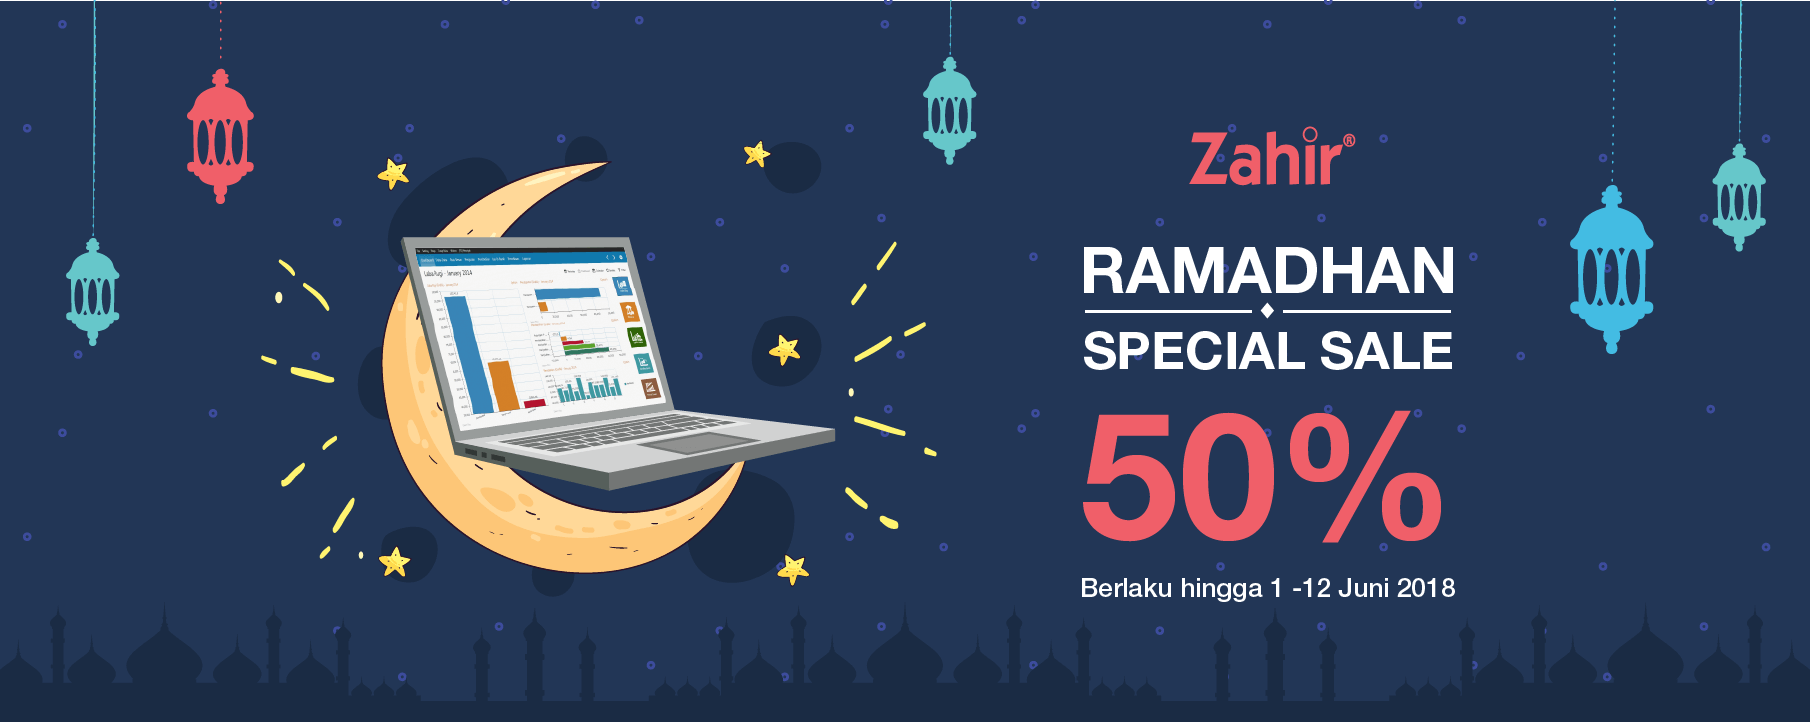 Ramadhan Special Sale Discount 50% - Software Akuntansi ...